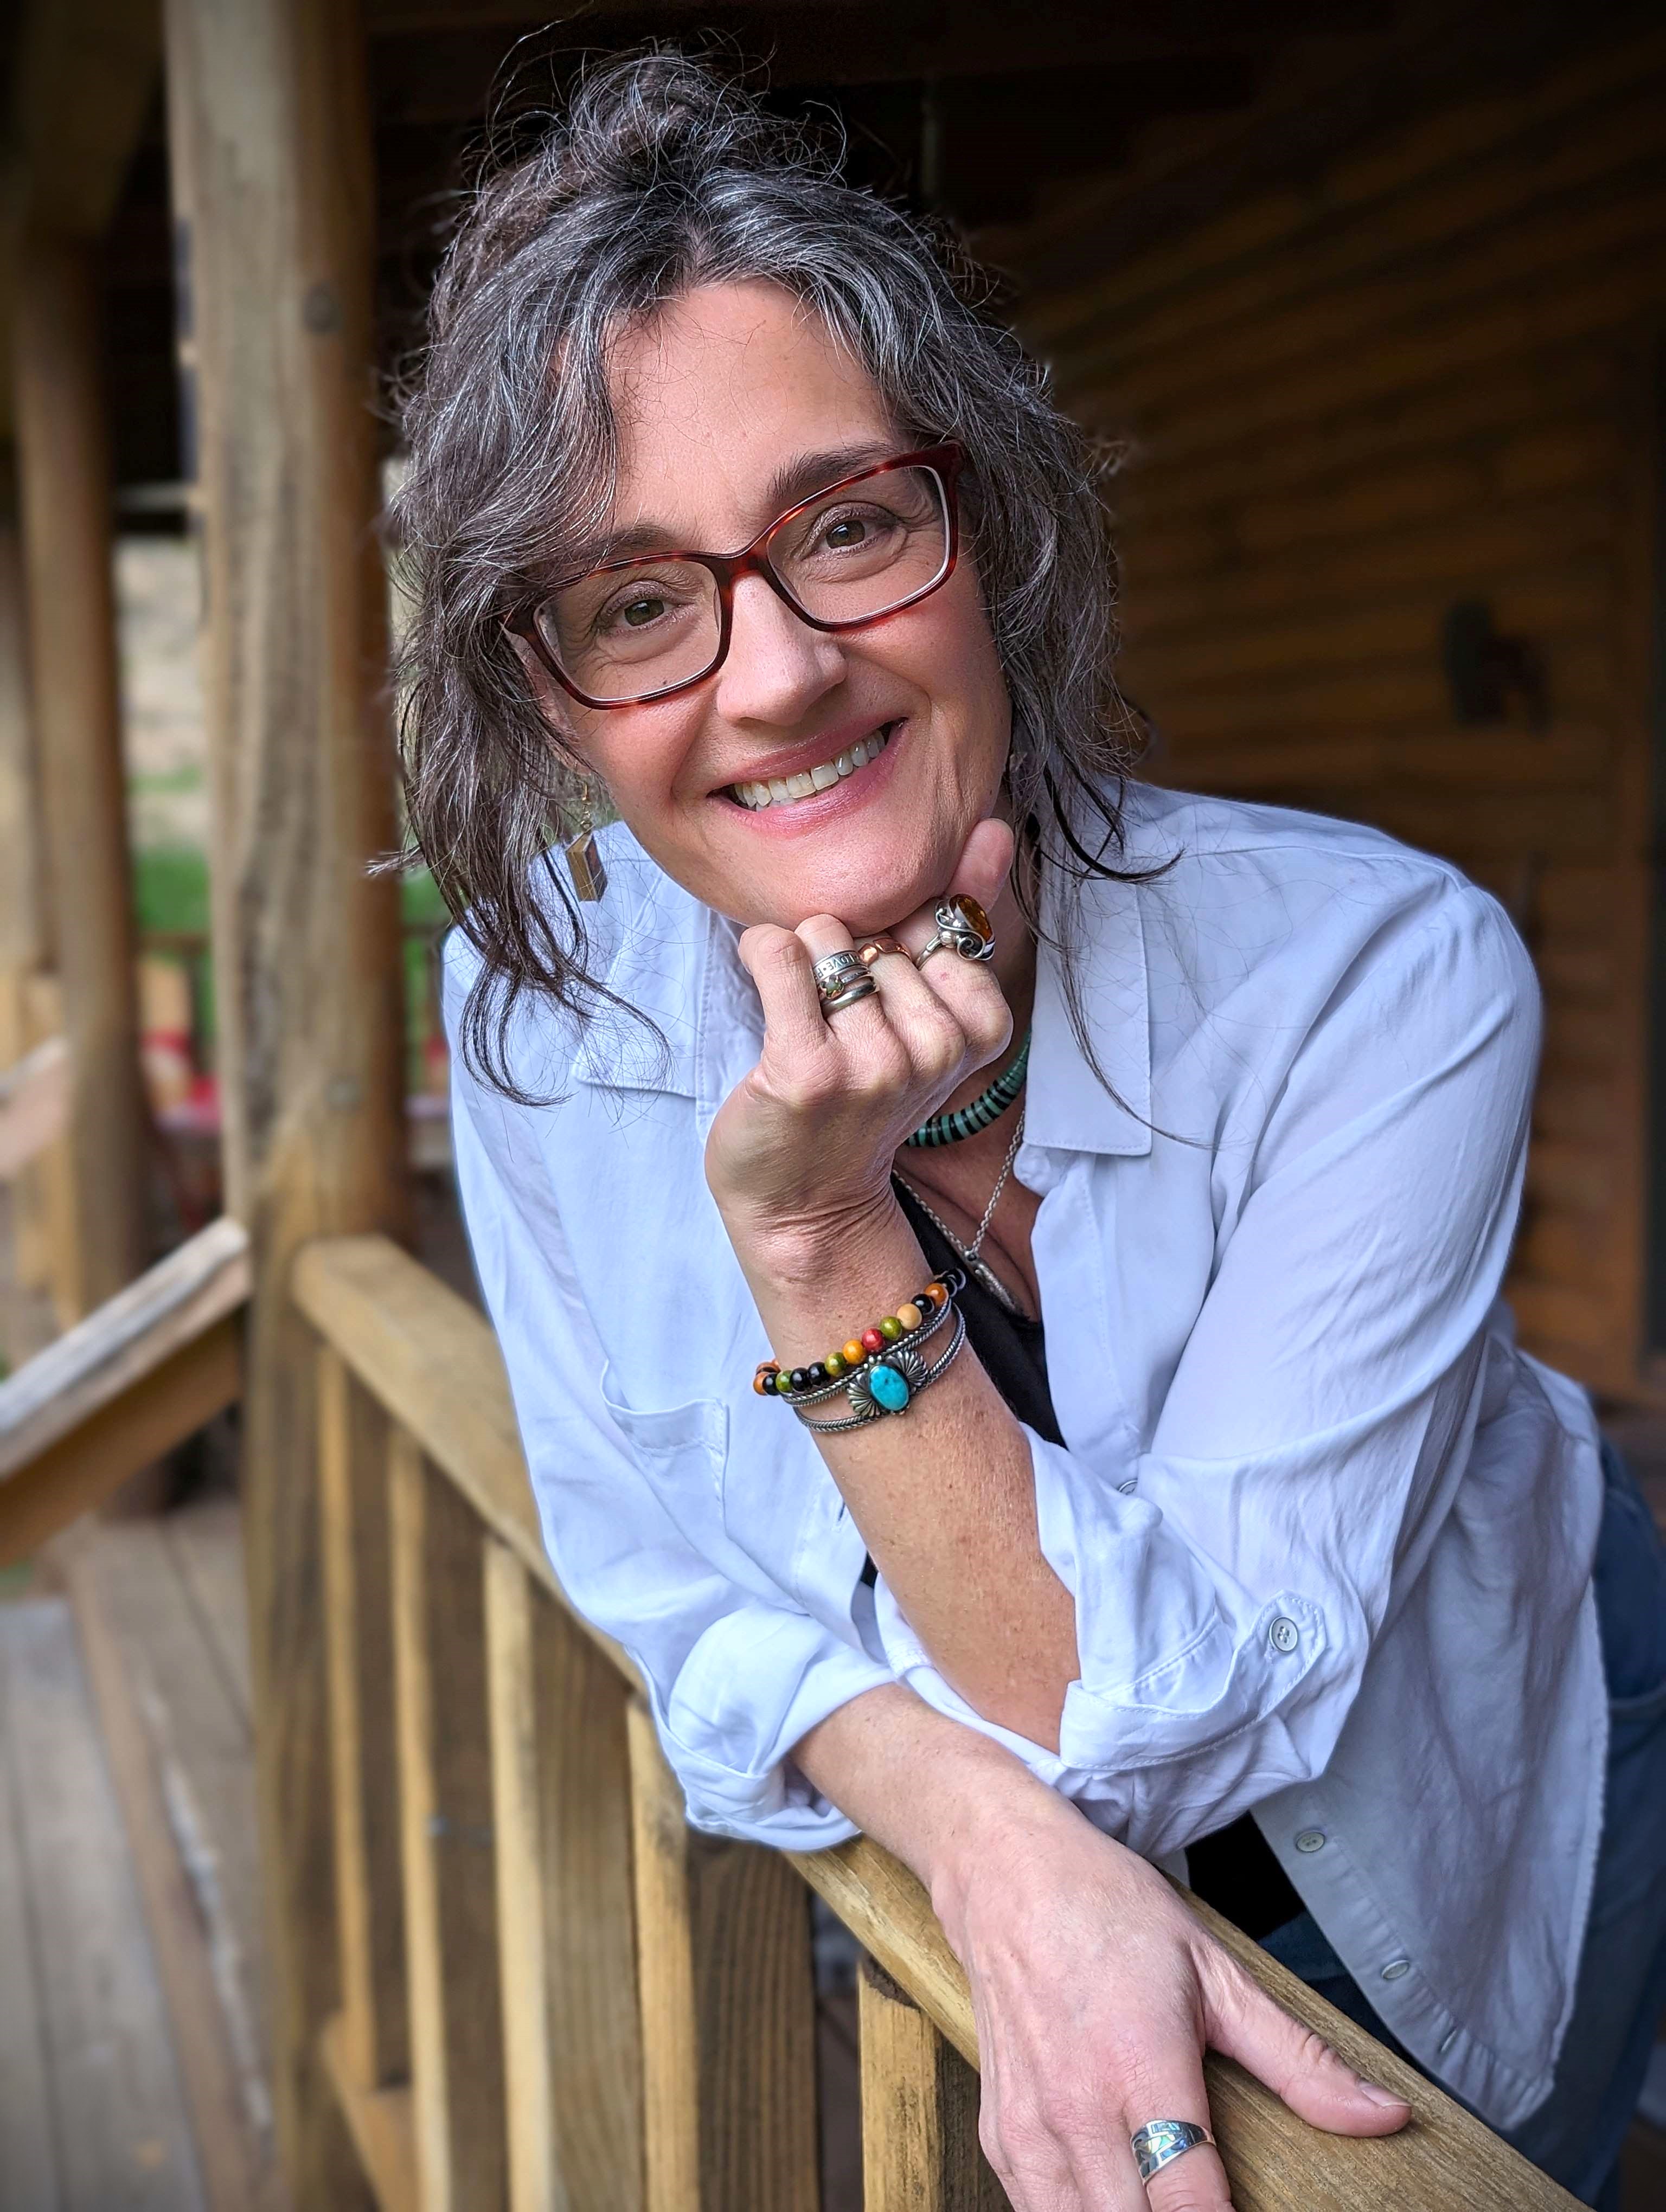 Children's Author Amanda Cleary Eastep